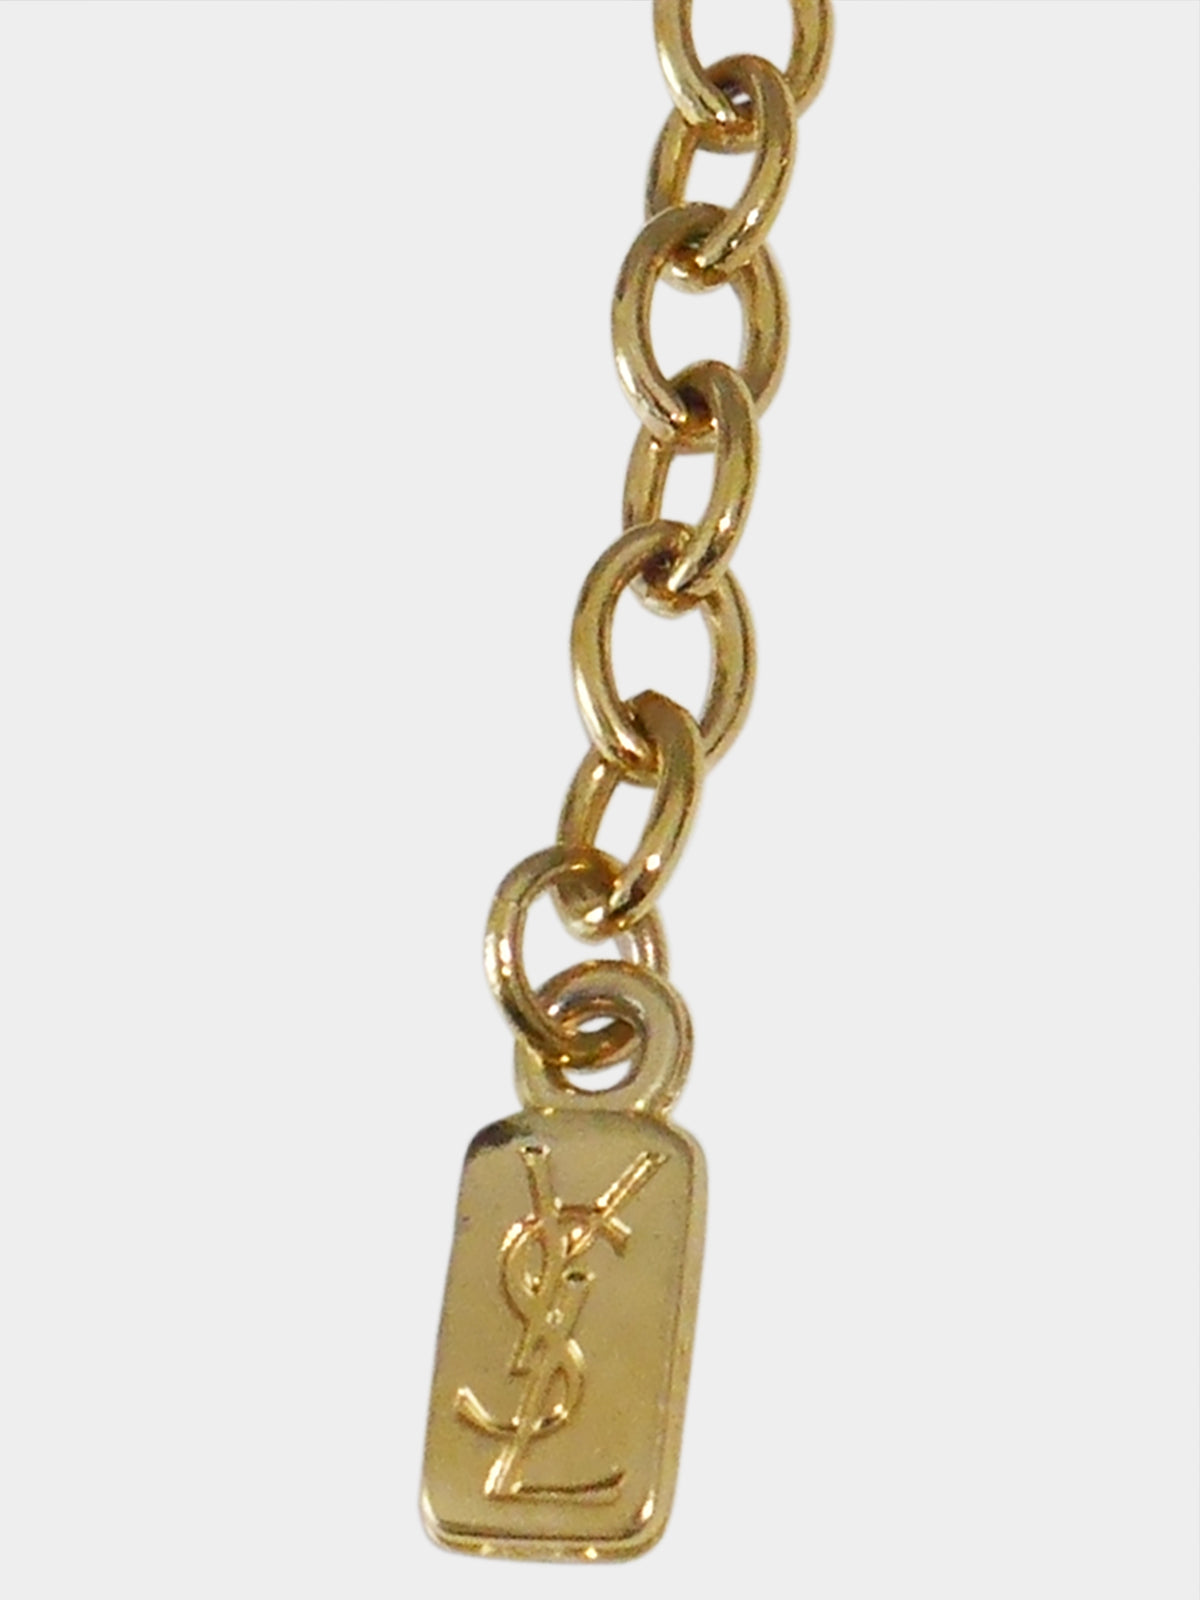 YVES SAINT LAURENT Vintage Textured Disc Necklace, Cuff Bracelet & Earrings Jewelry Set